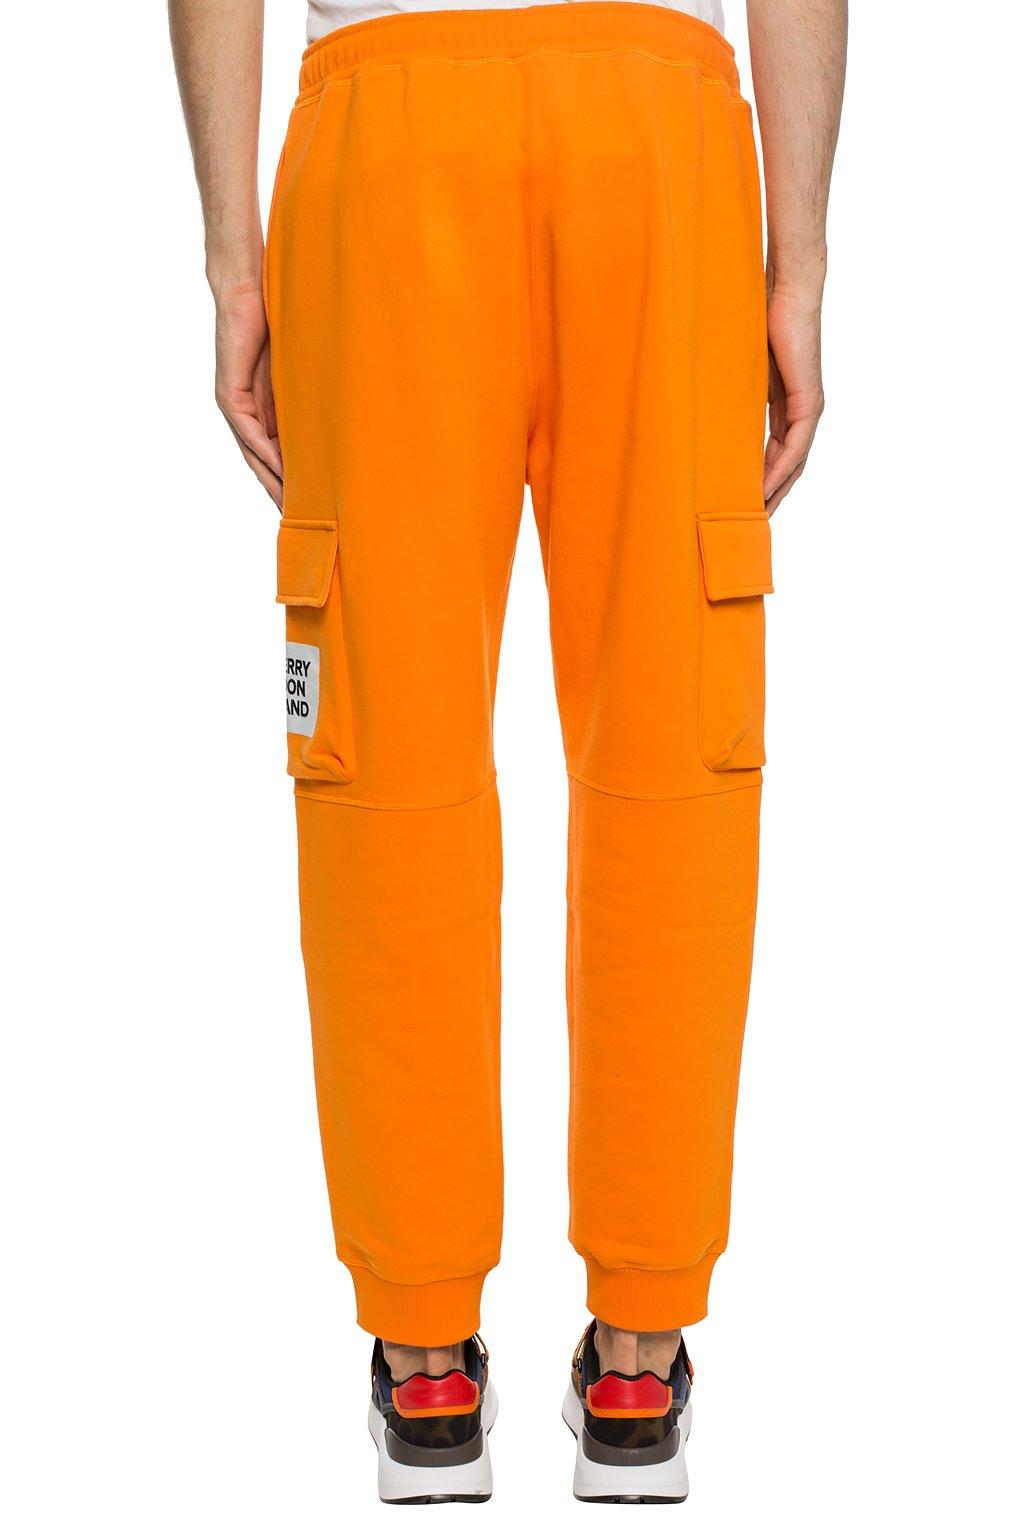 Burberry Cotton Branded Sweatpants in Orange for Men - Lyst